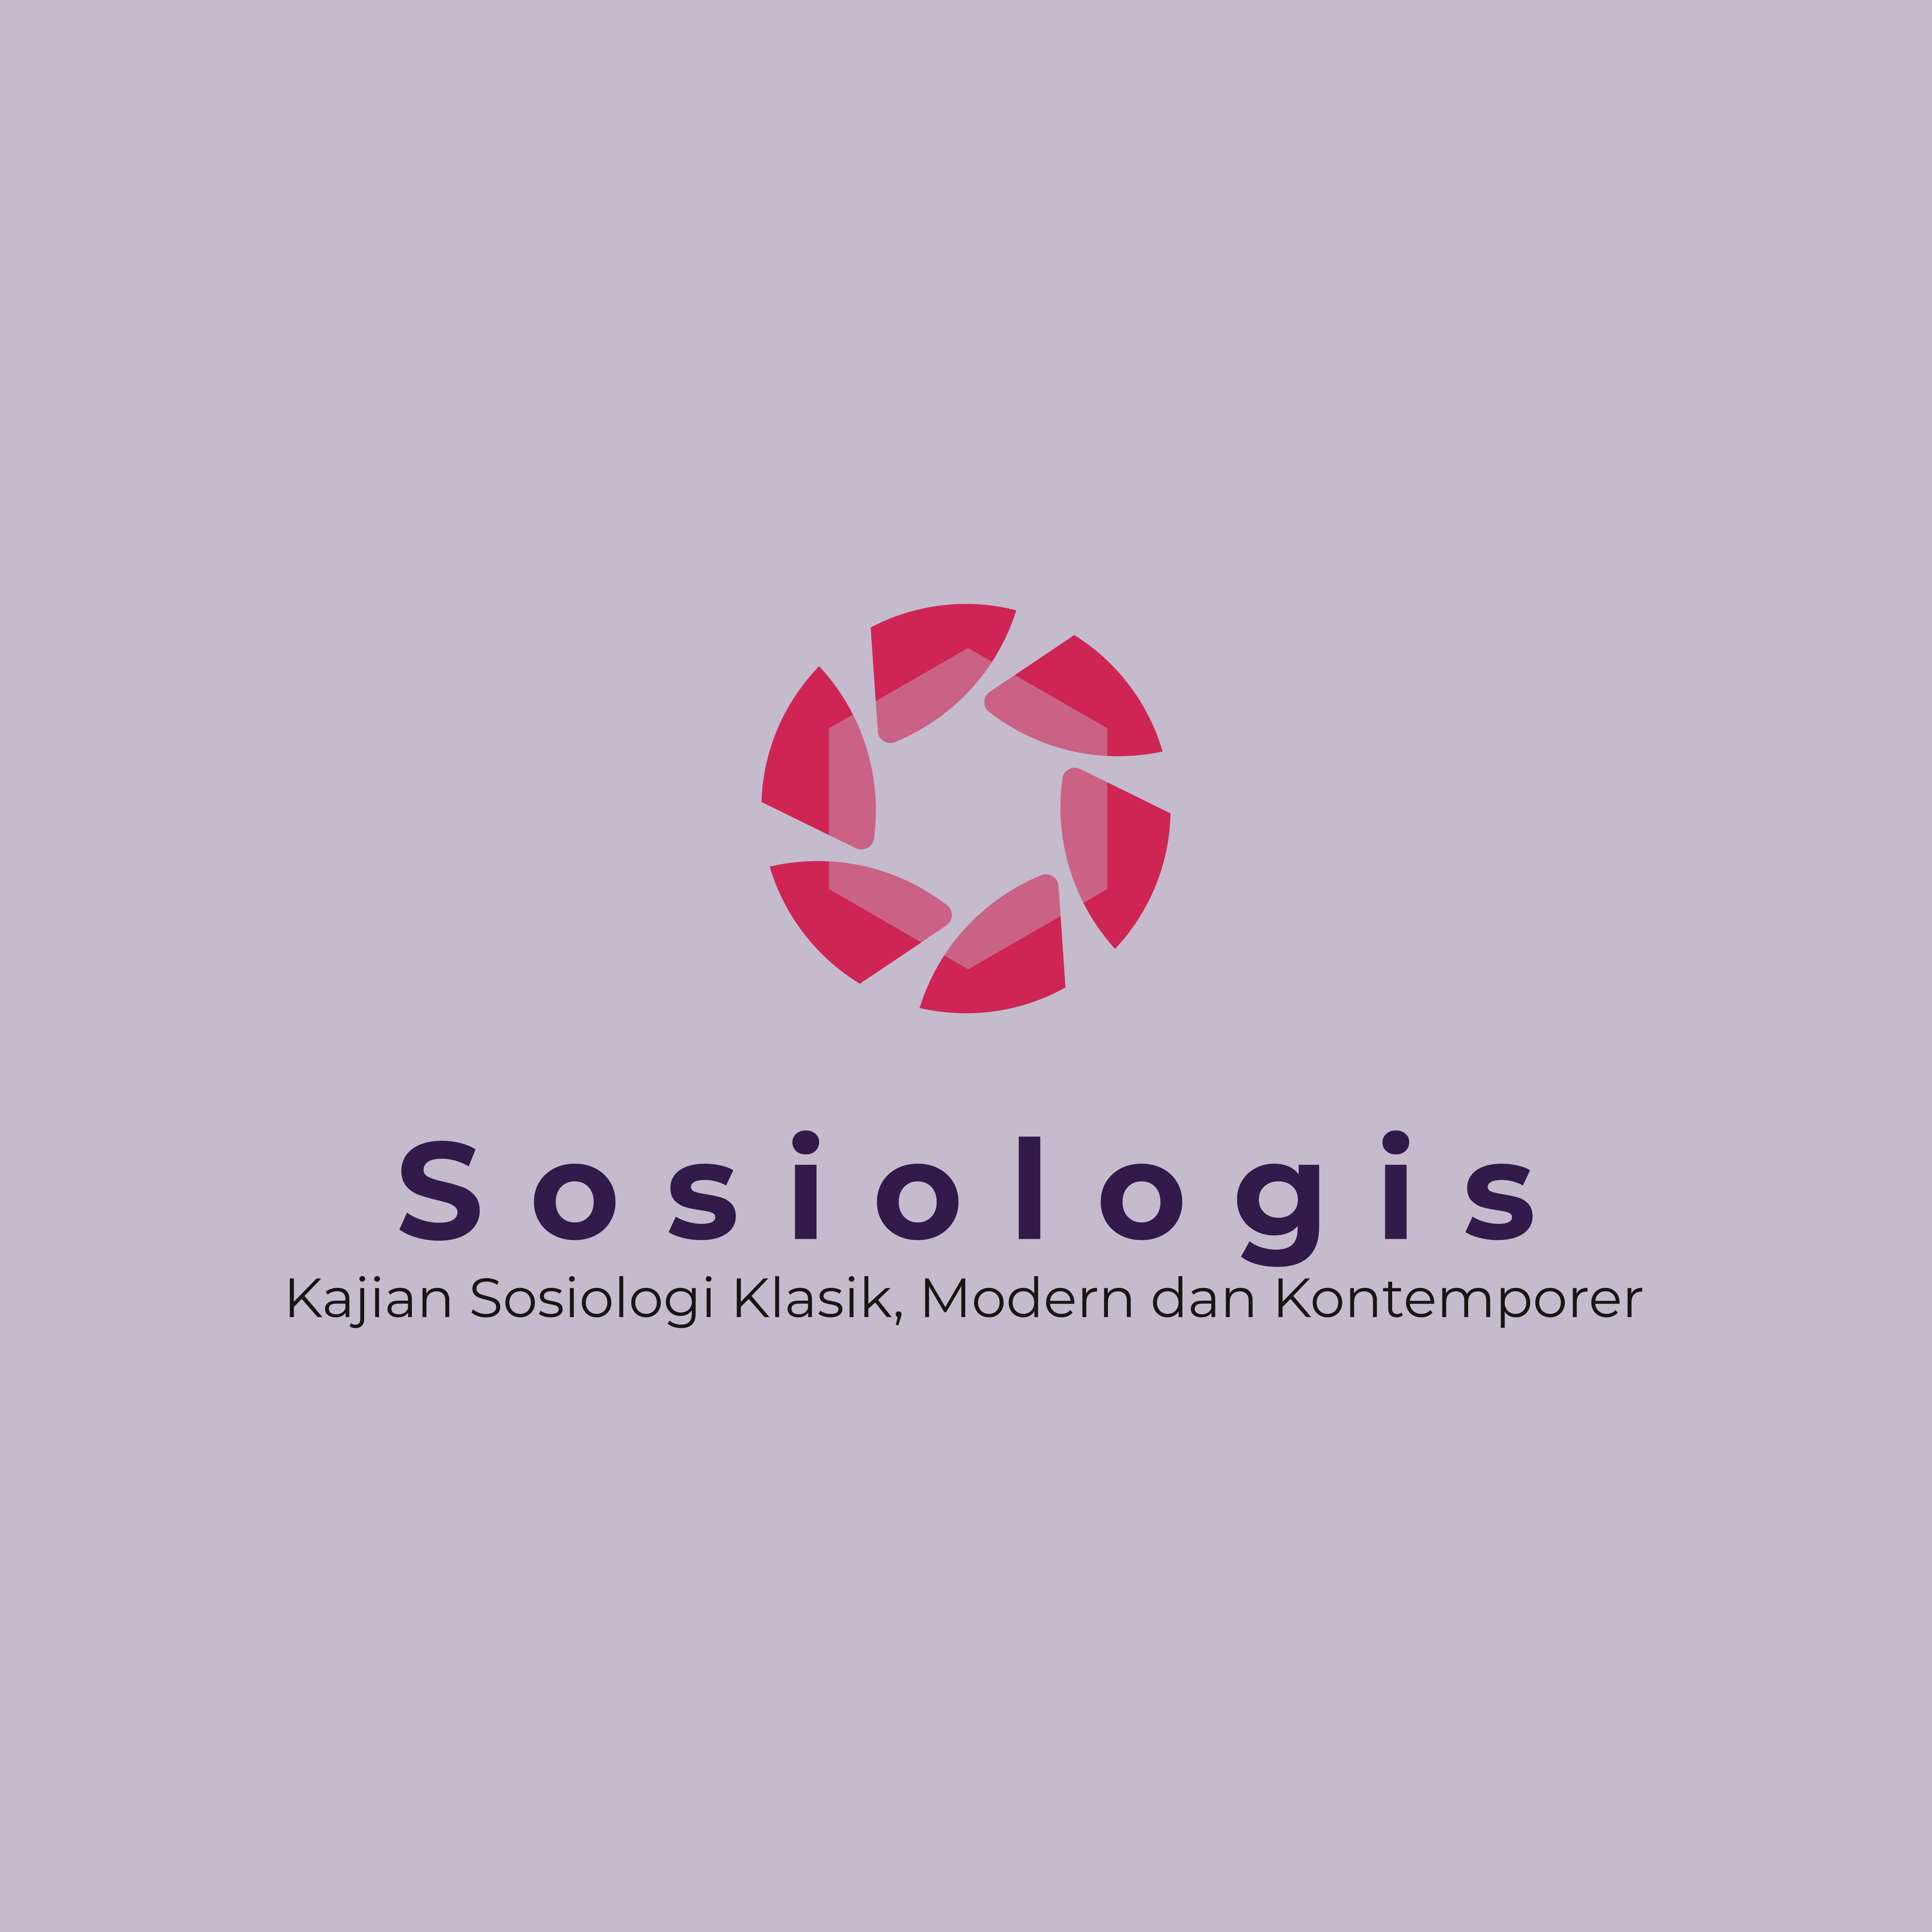 Sosiologis: Kajian Sosiologi Klasik, Modern dan Kontenporer